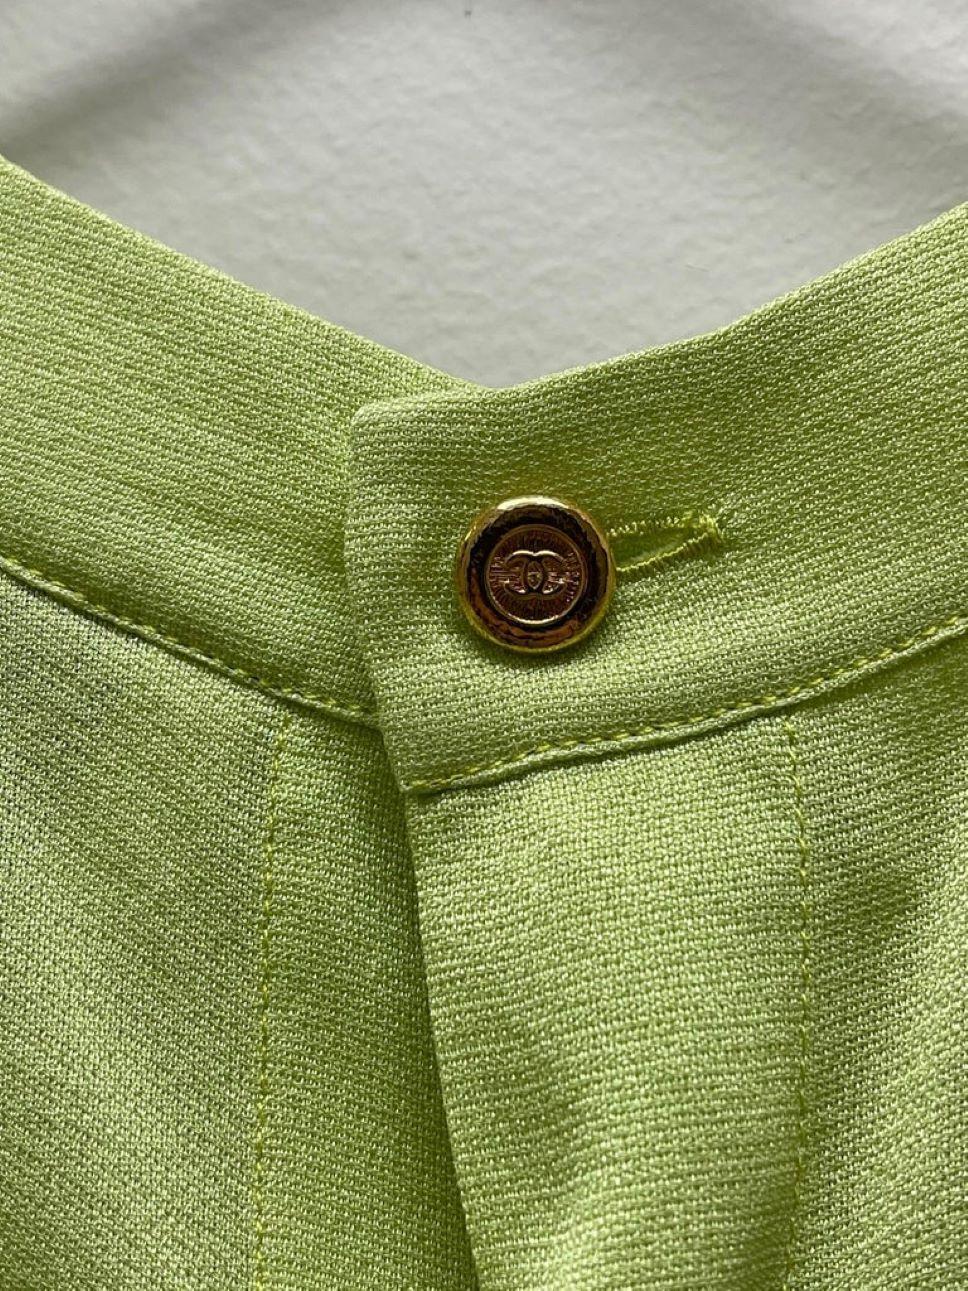 CHANEL BOUTIQUE Chartreuse Green Suit Signature Chanel 10